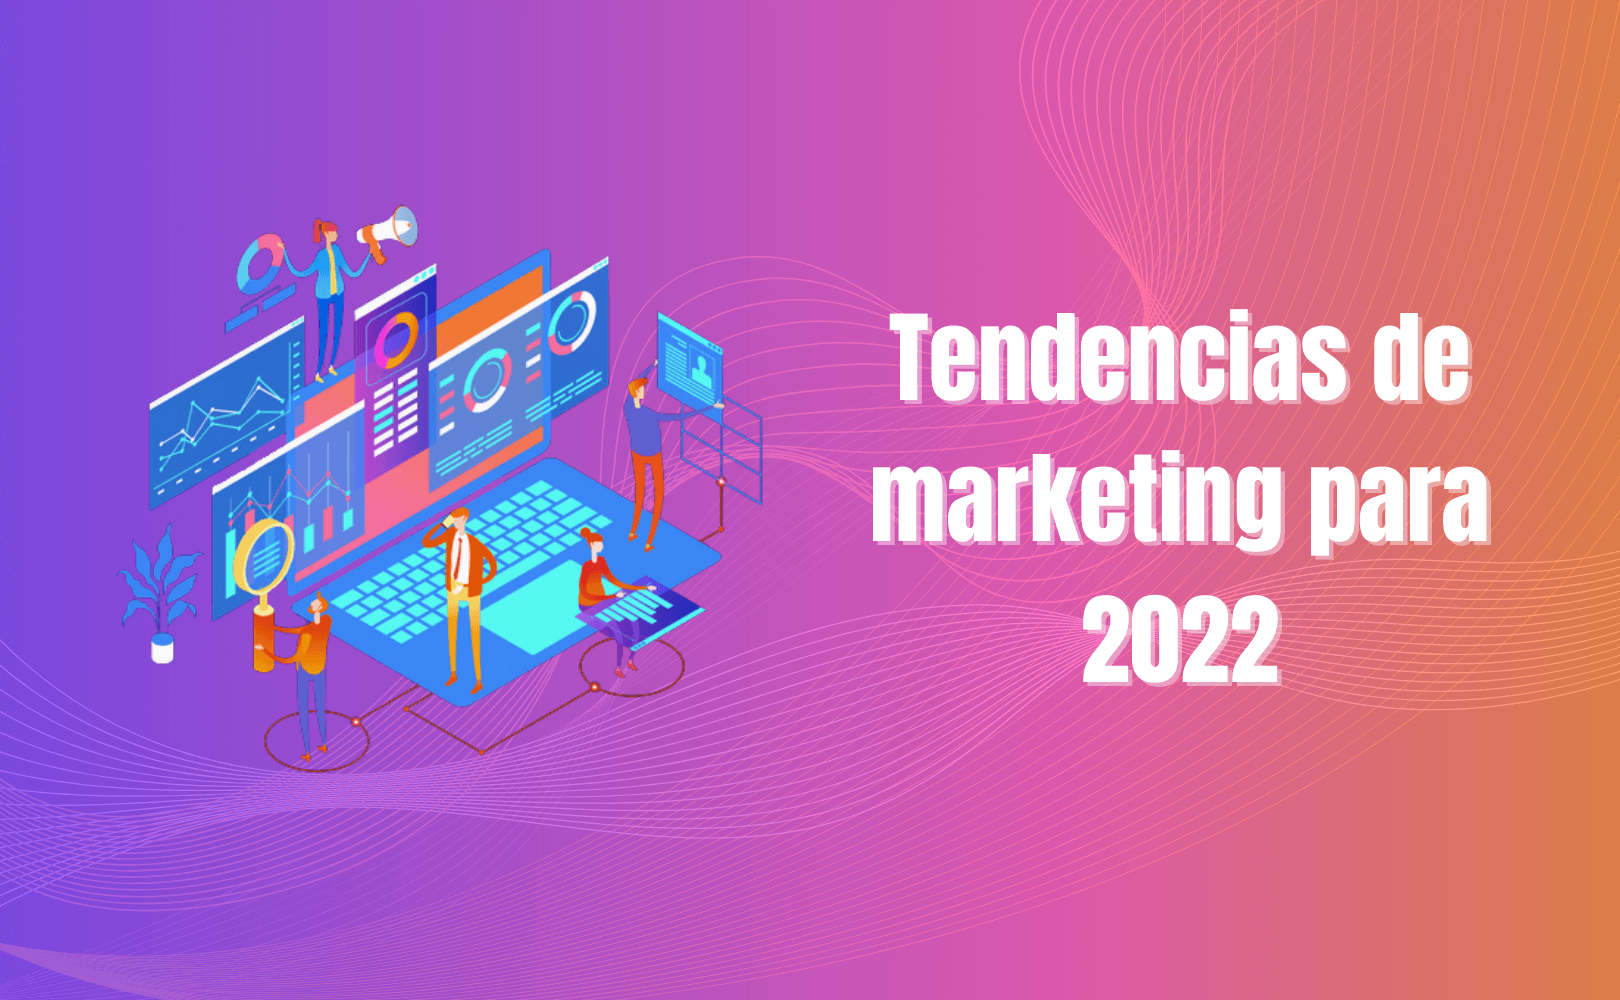 Tendencias de marketing para 2022